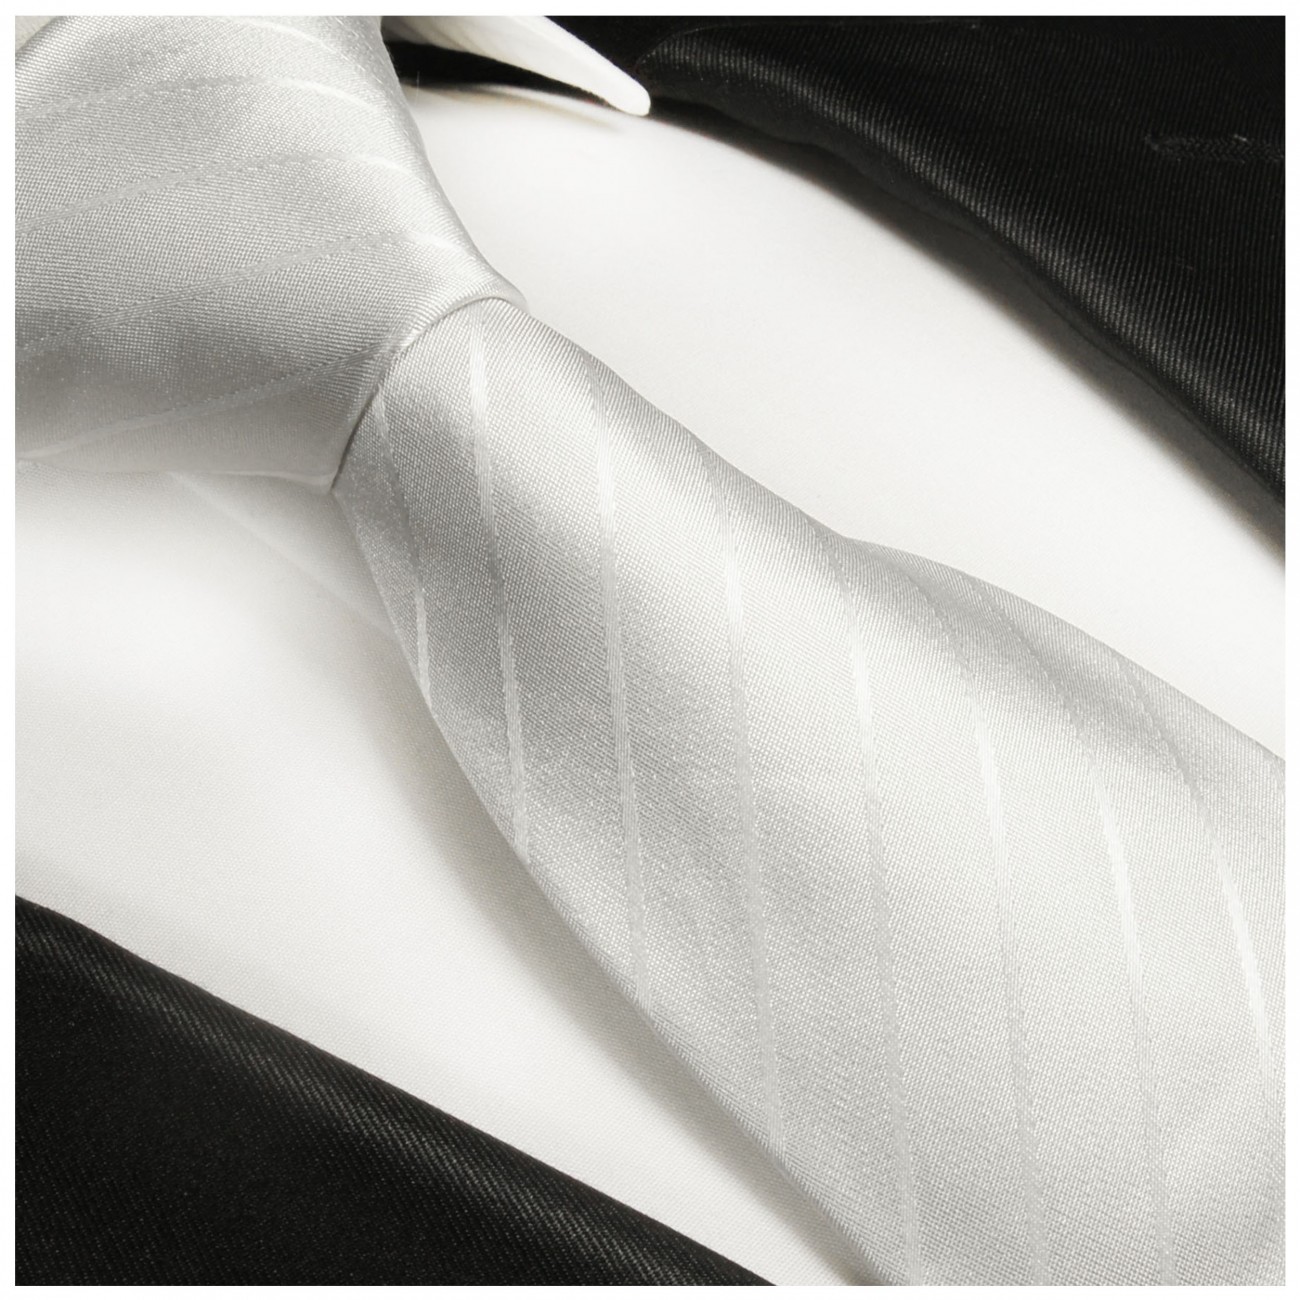 Extra lange Krawatte 165cm - Krawatte ivory weiß gestreift